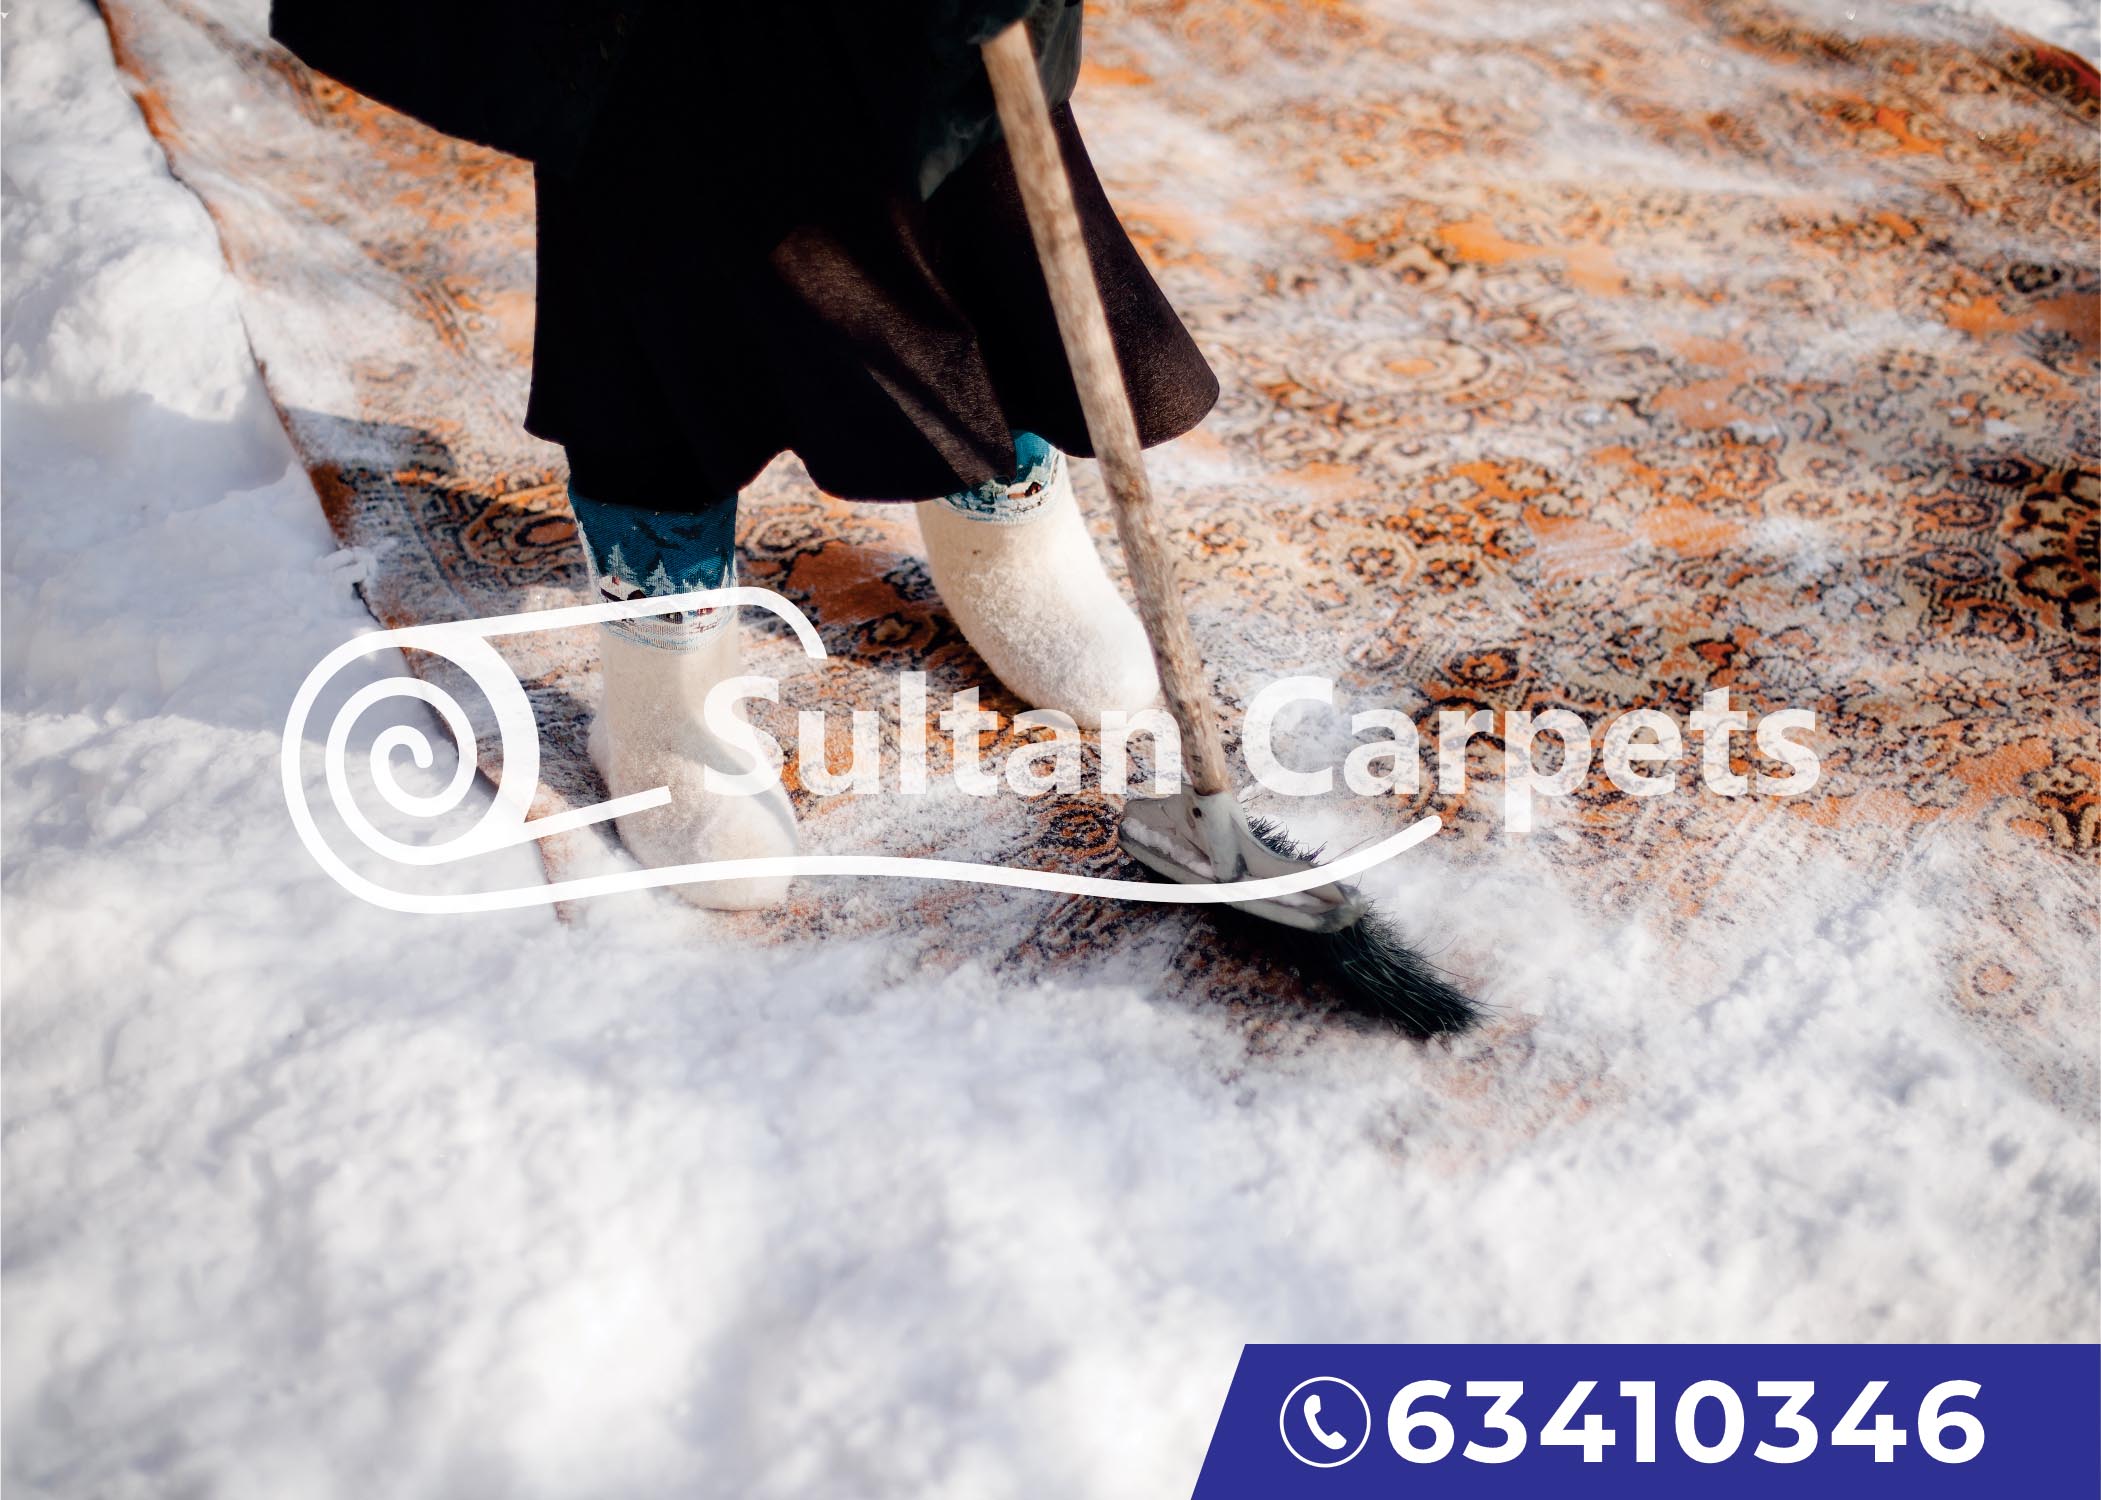 Sultan carpet cleaning hong kong